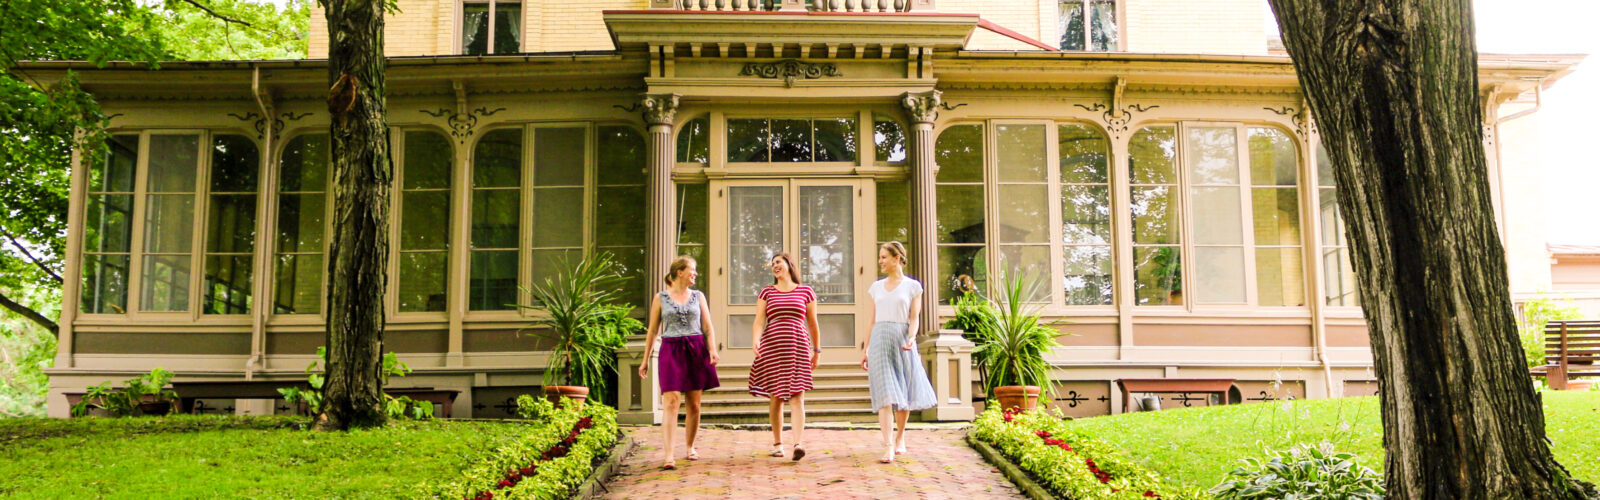 3 woman walking in front of Villa Louis building